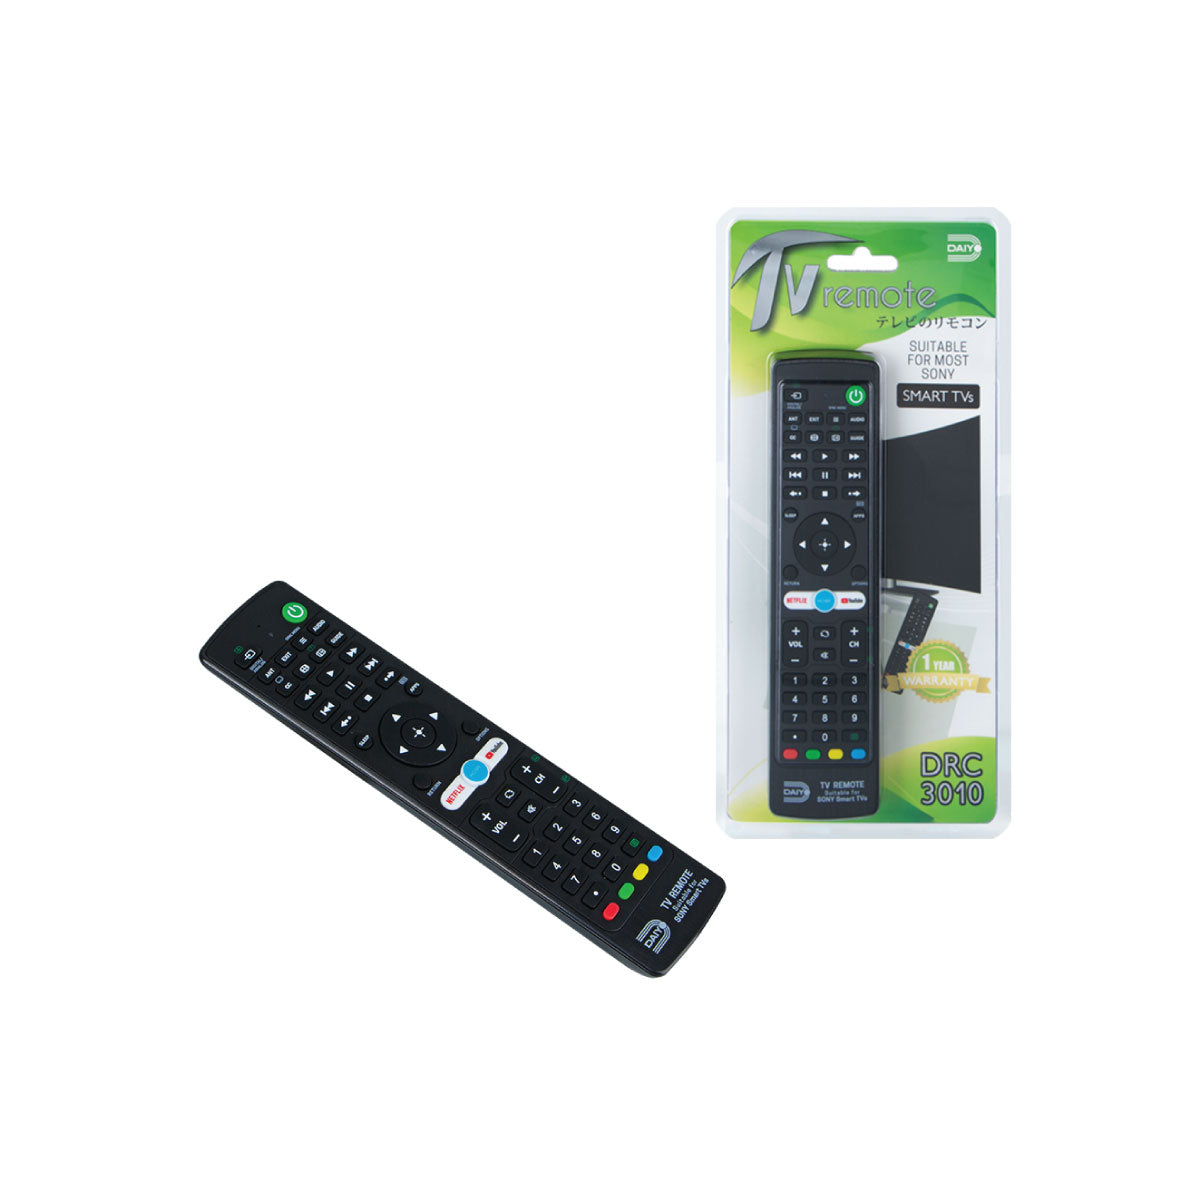 Daiyo DRC 3010 Remote Control for Sony Smart TVs